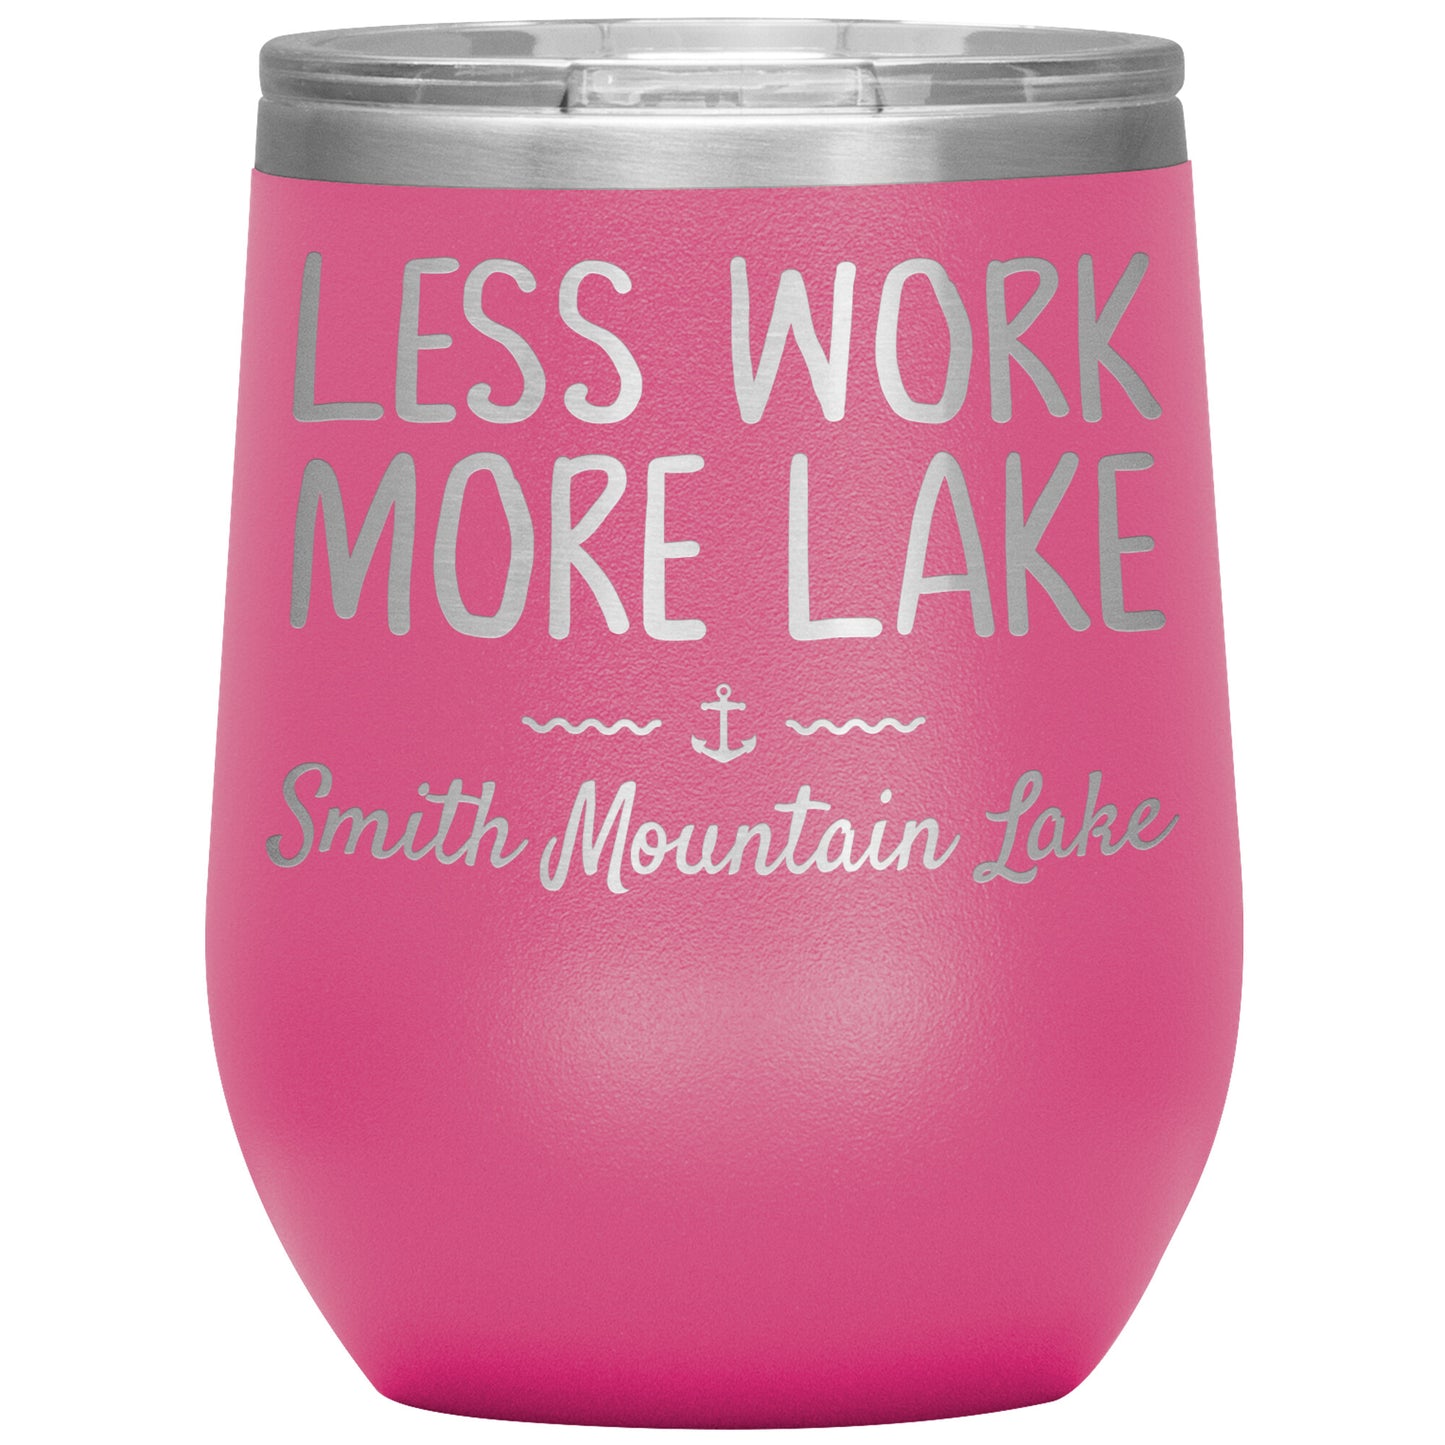 Less Work More Lake Smith Mountain Lake - Laser Etched 12oz Wine Tumbler